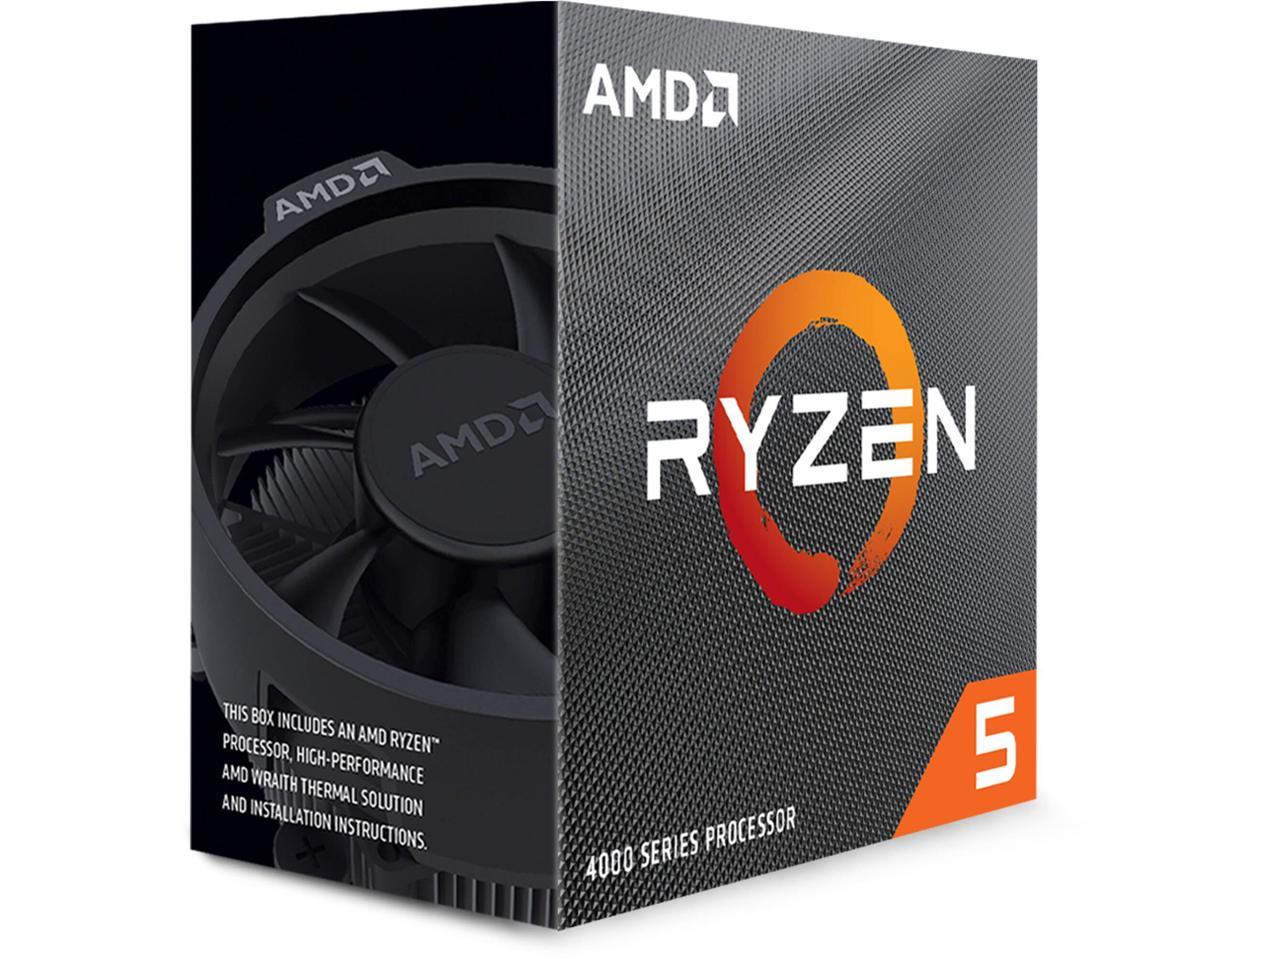 AMD Ryzen 5 4500 6-Core Desktop Processor w/ Wraith Stealth Cooler $69 + Free Shipping